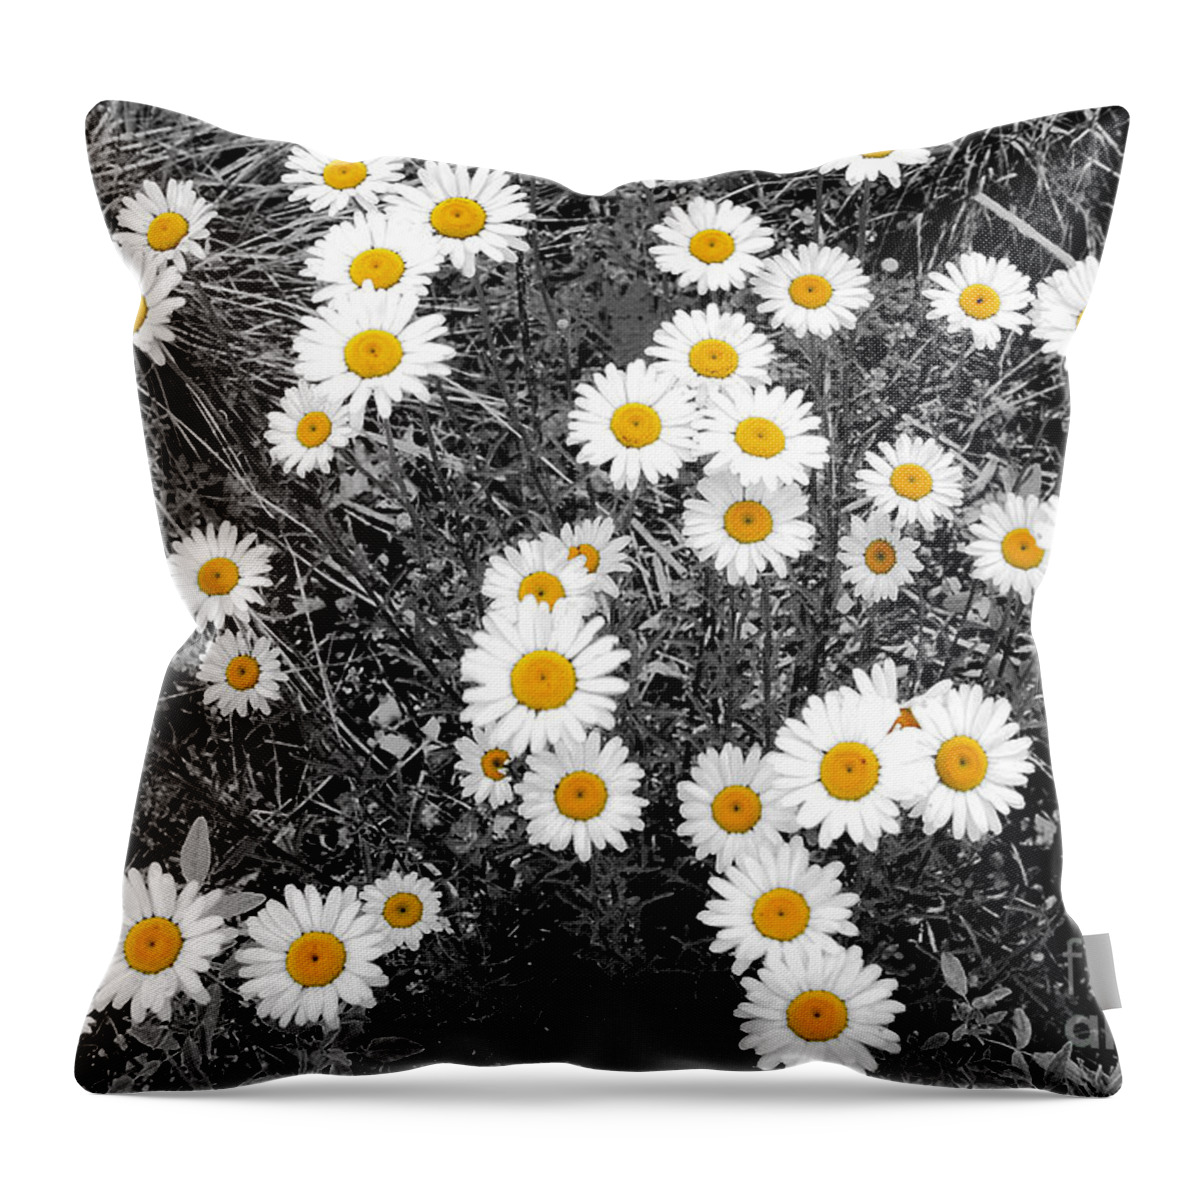 Daisy Throw Pillow featuring the photograph 44 Daisies by Brett Maniscalco